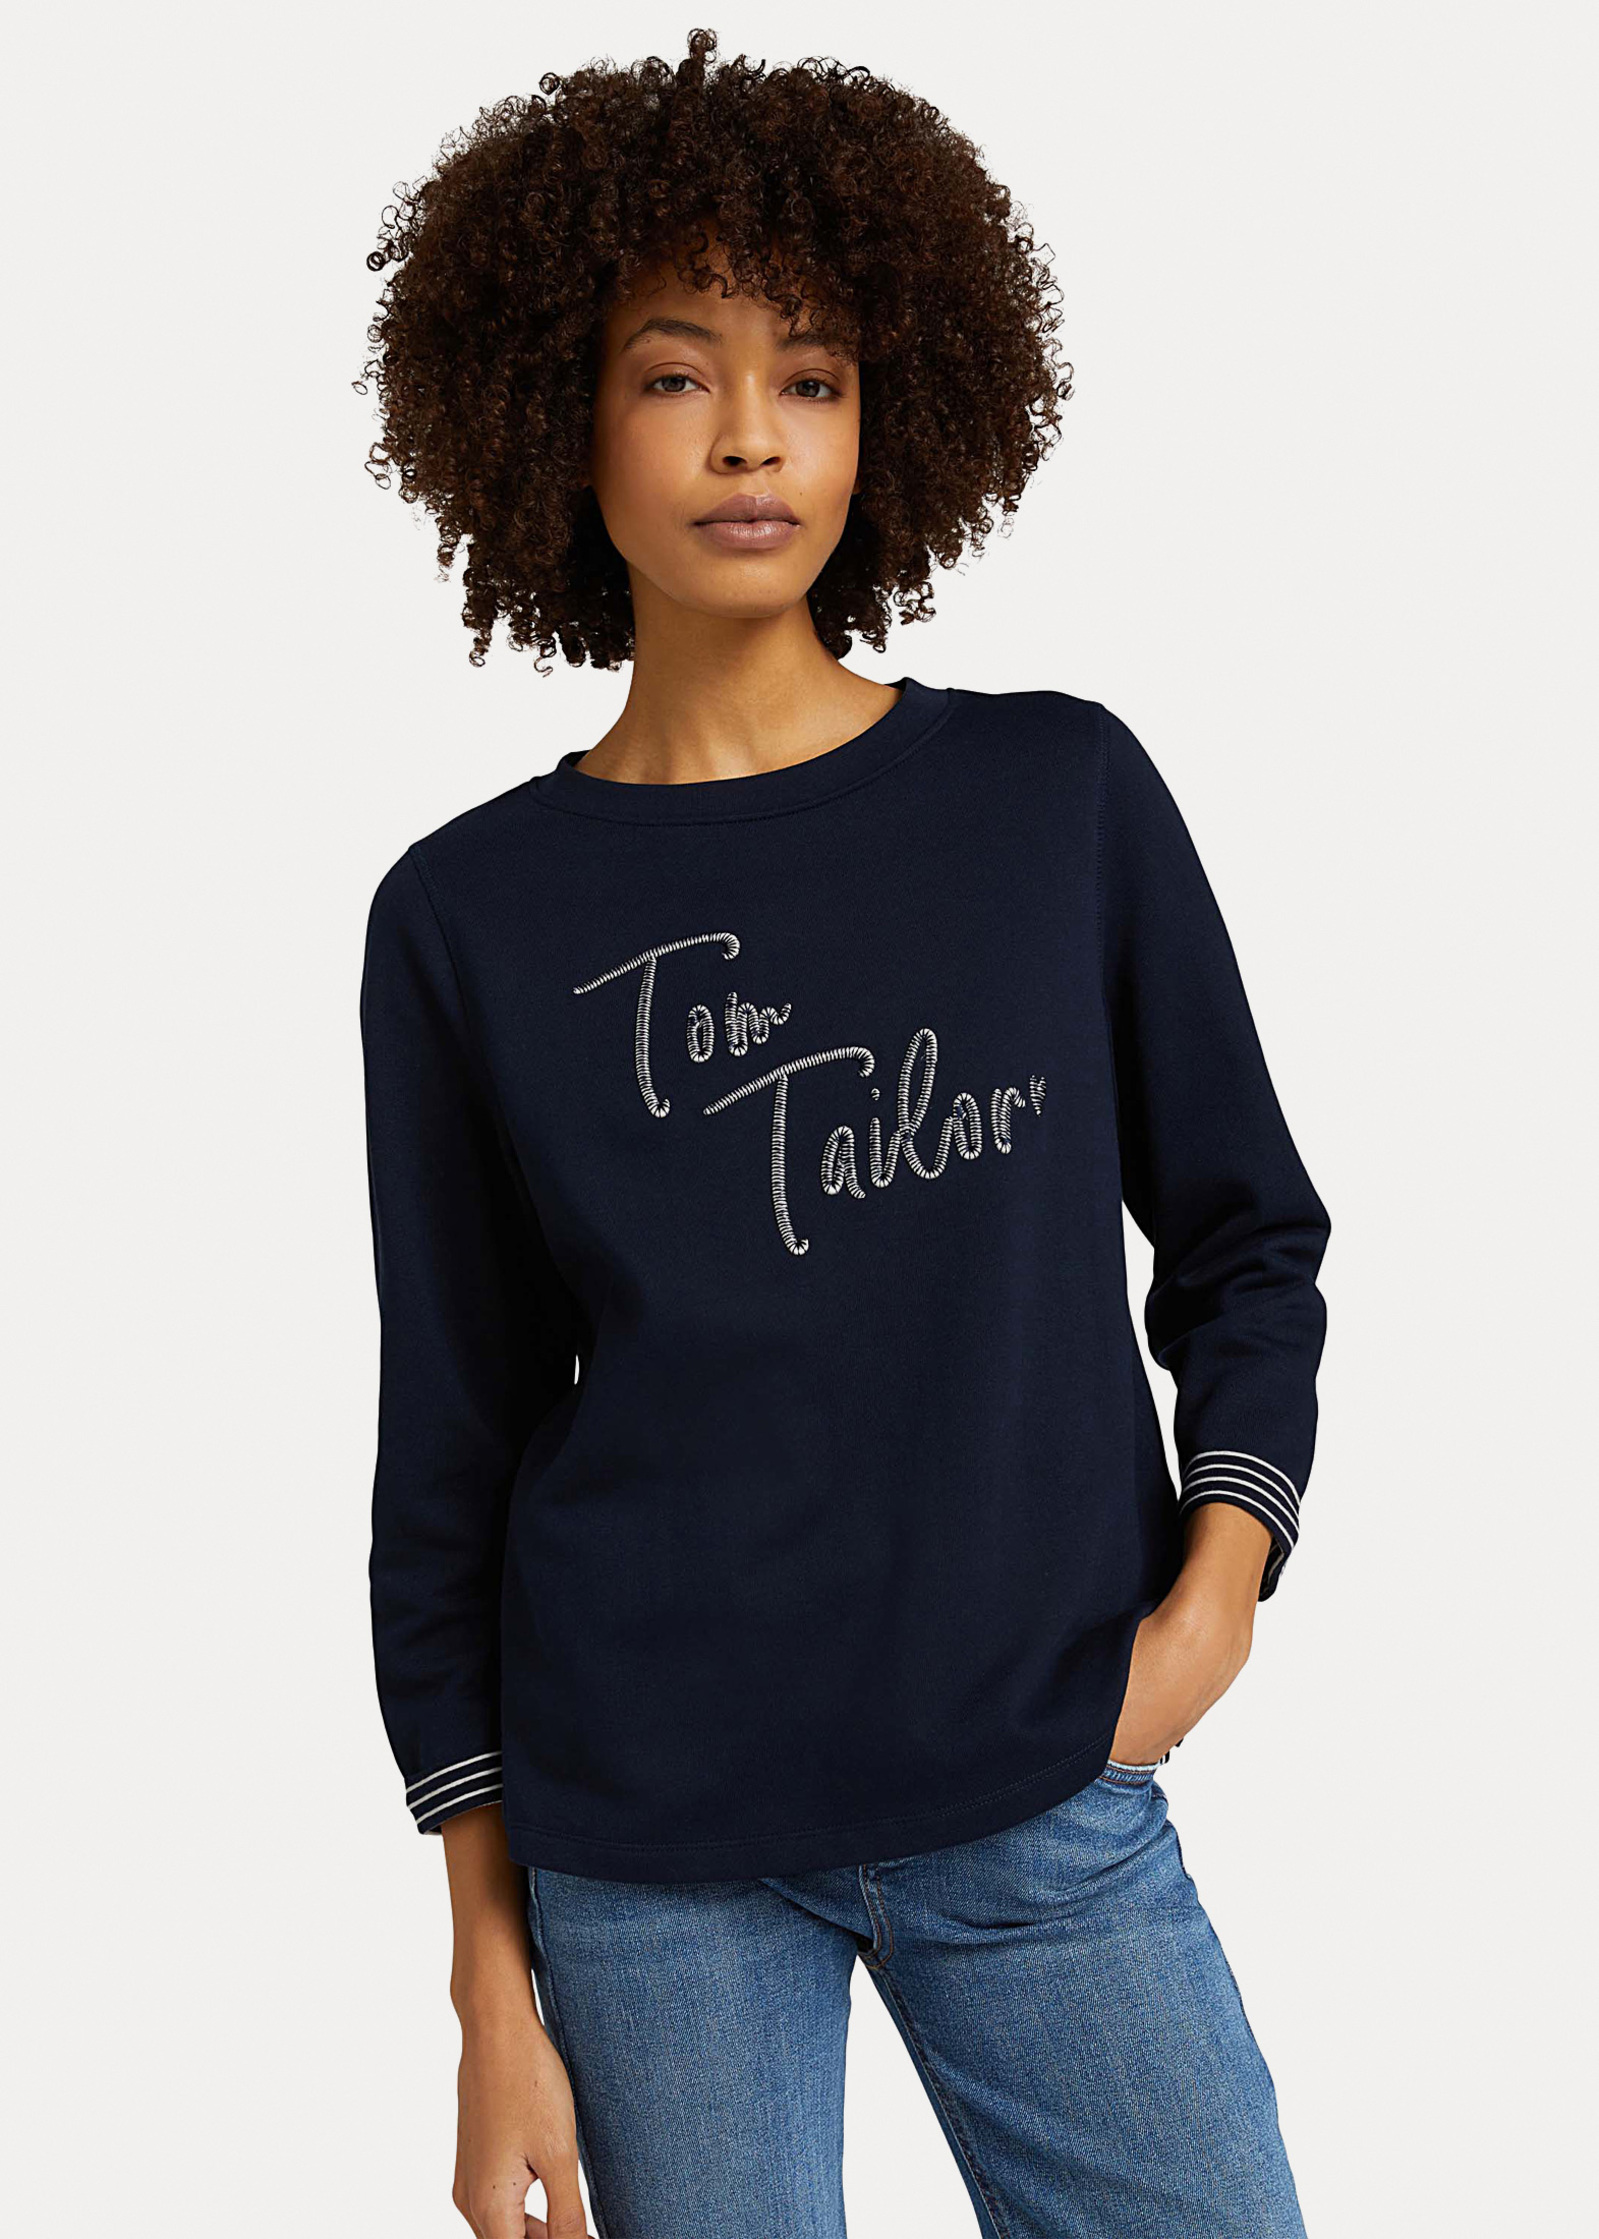 Tom Tailor® Long - Captain XS Blue Sleeve Sky Size Sweatshirt